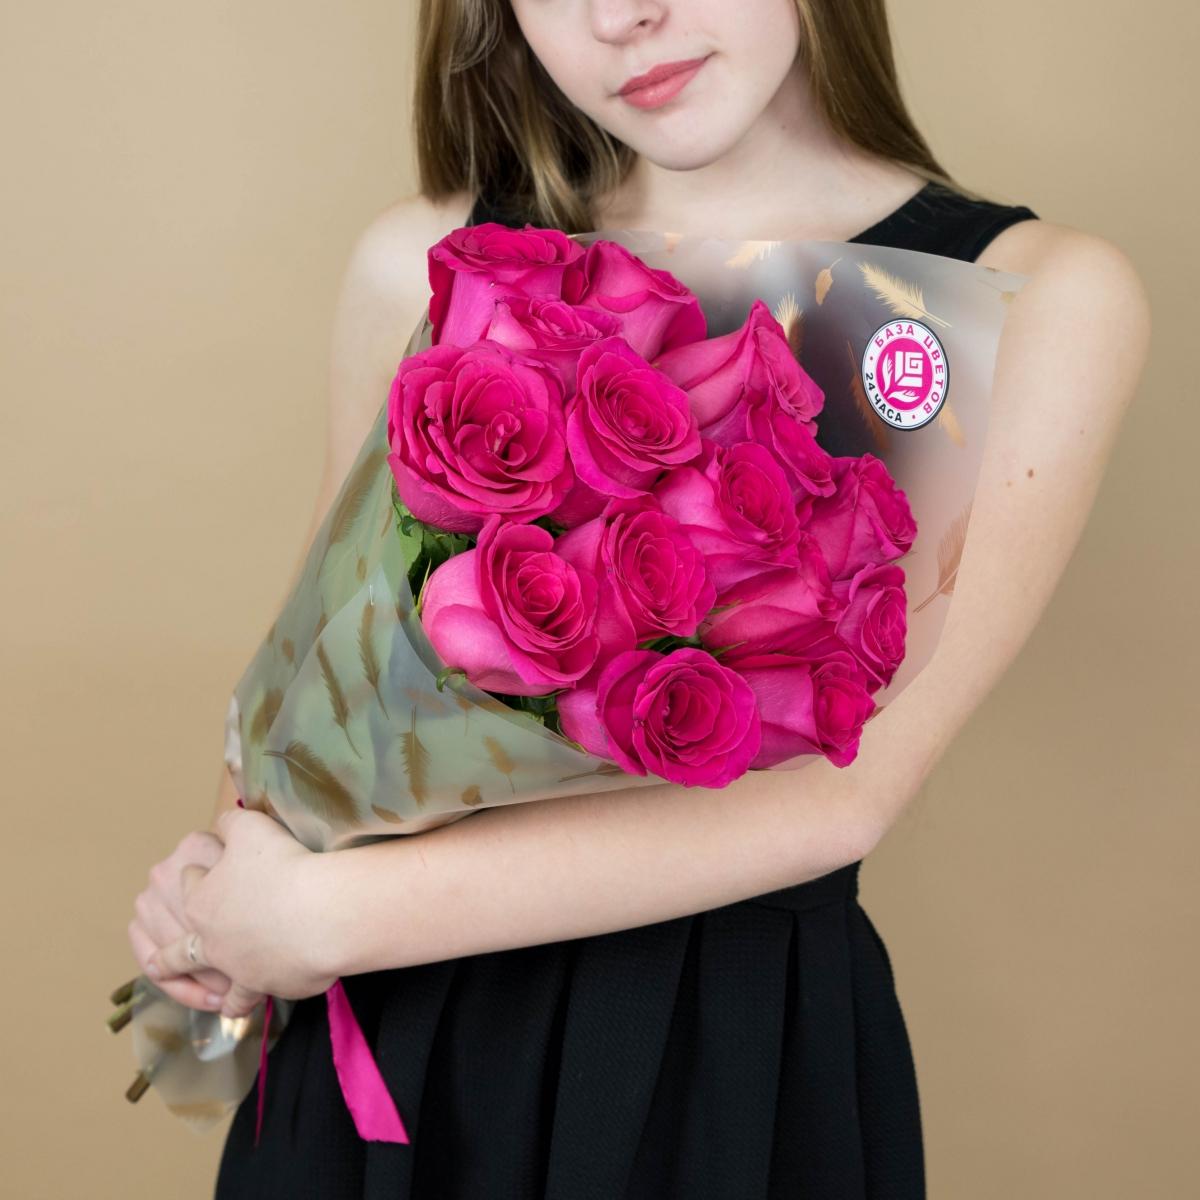 Букет из розовых роз 15 шт 40 см (Эквадор) артикул букета  15544krv